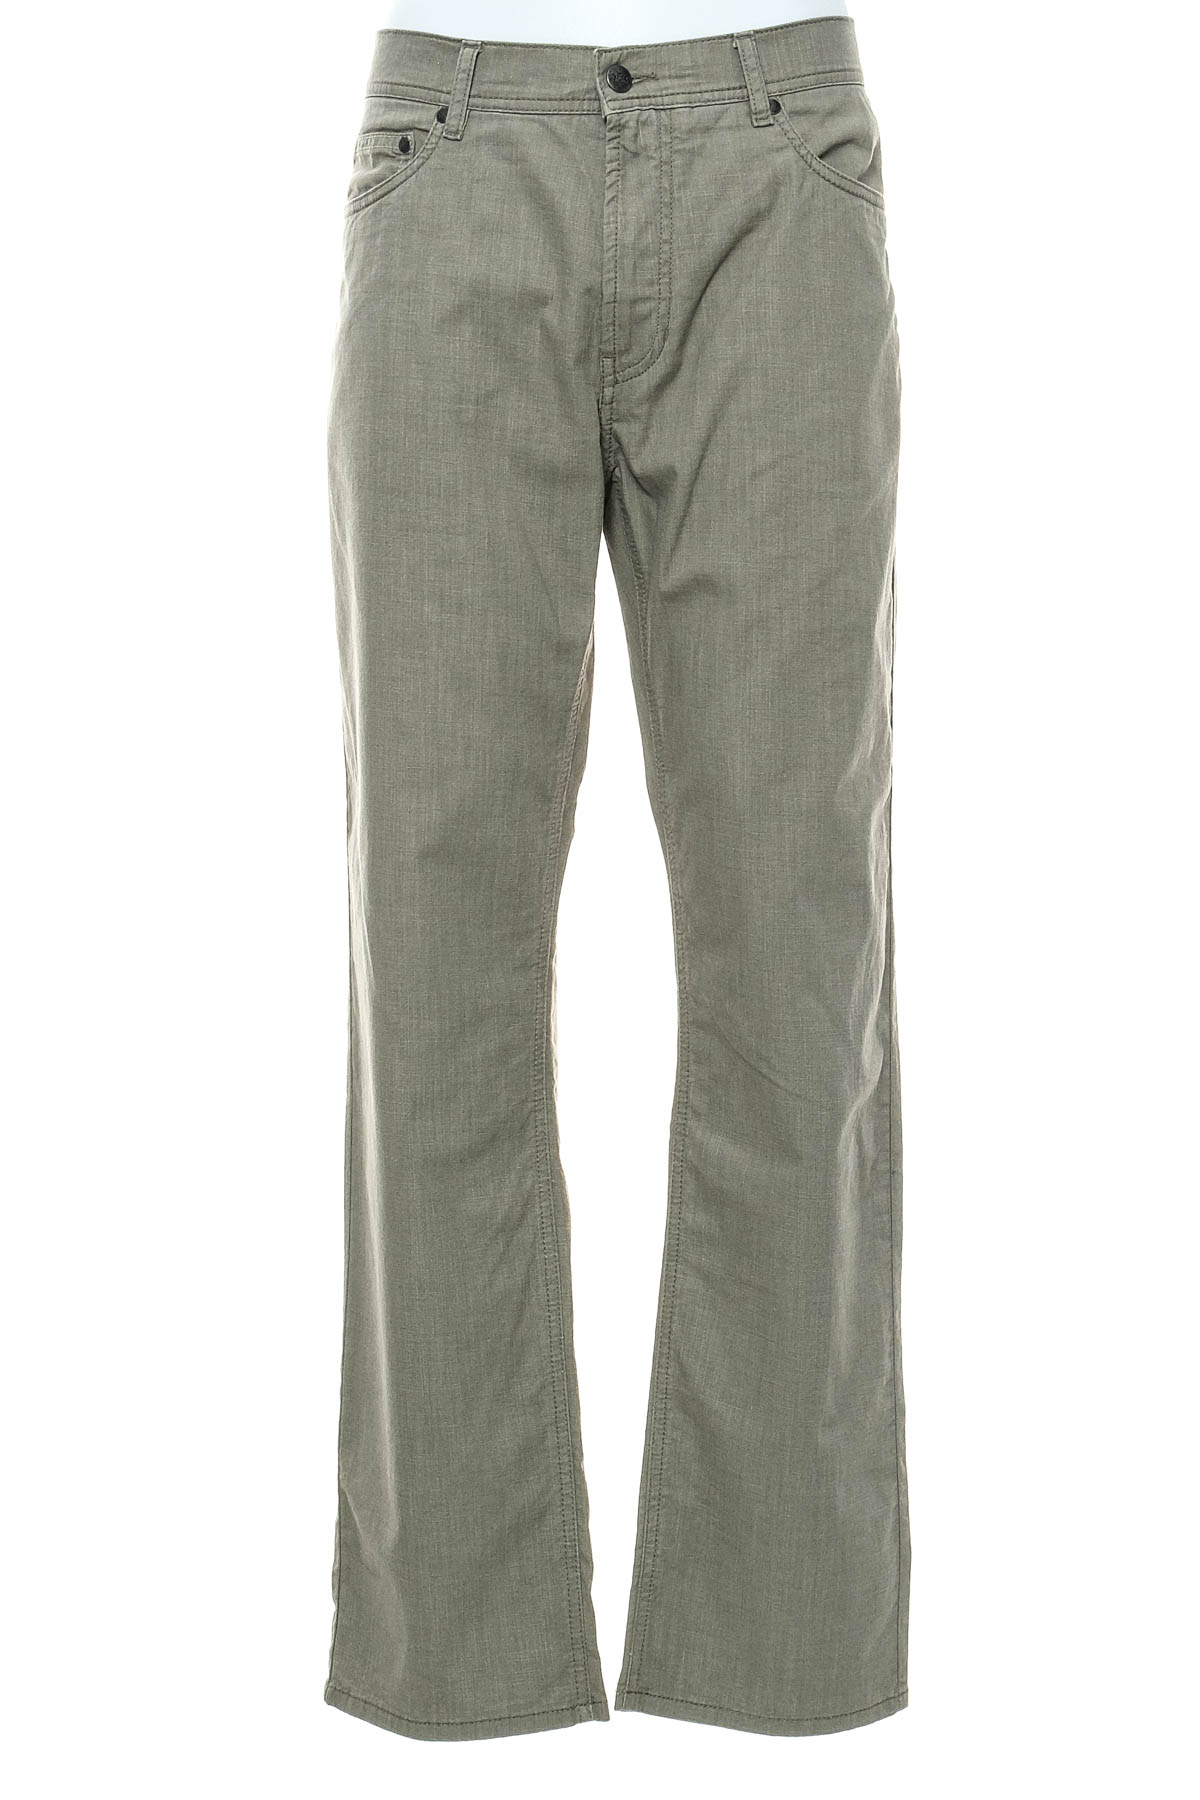 Men's trousers - Walbusch - 0